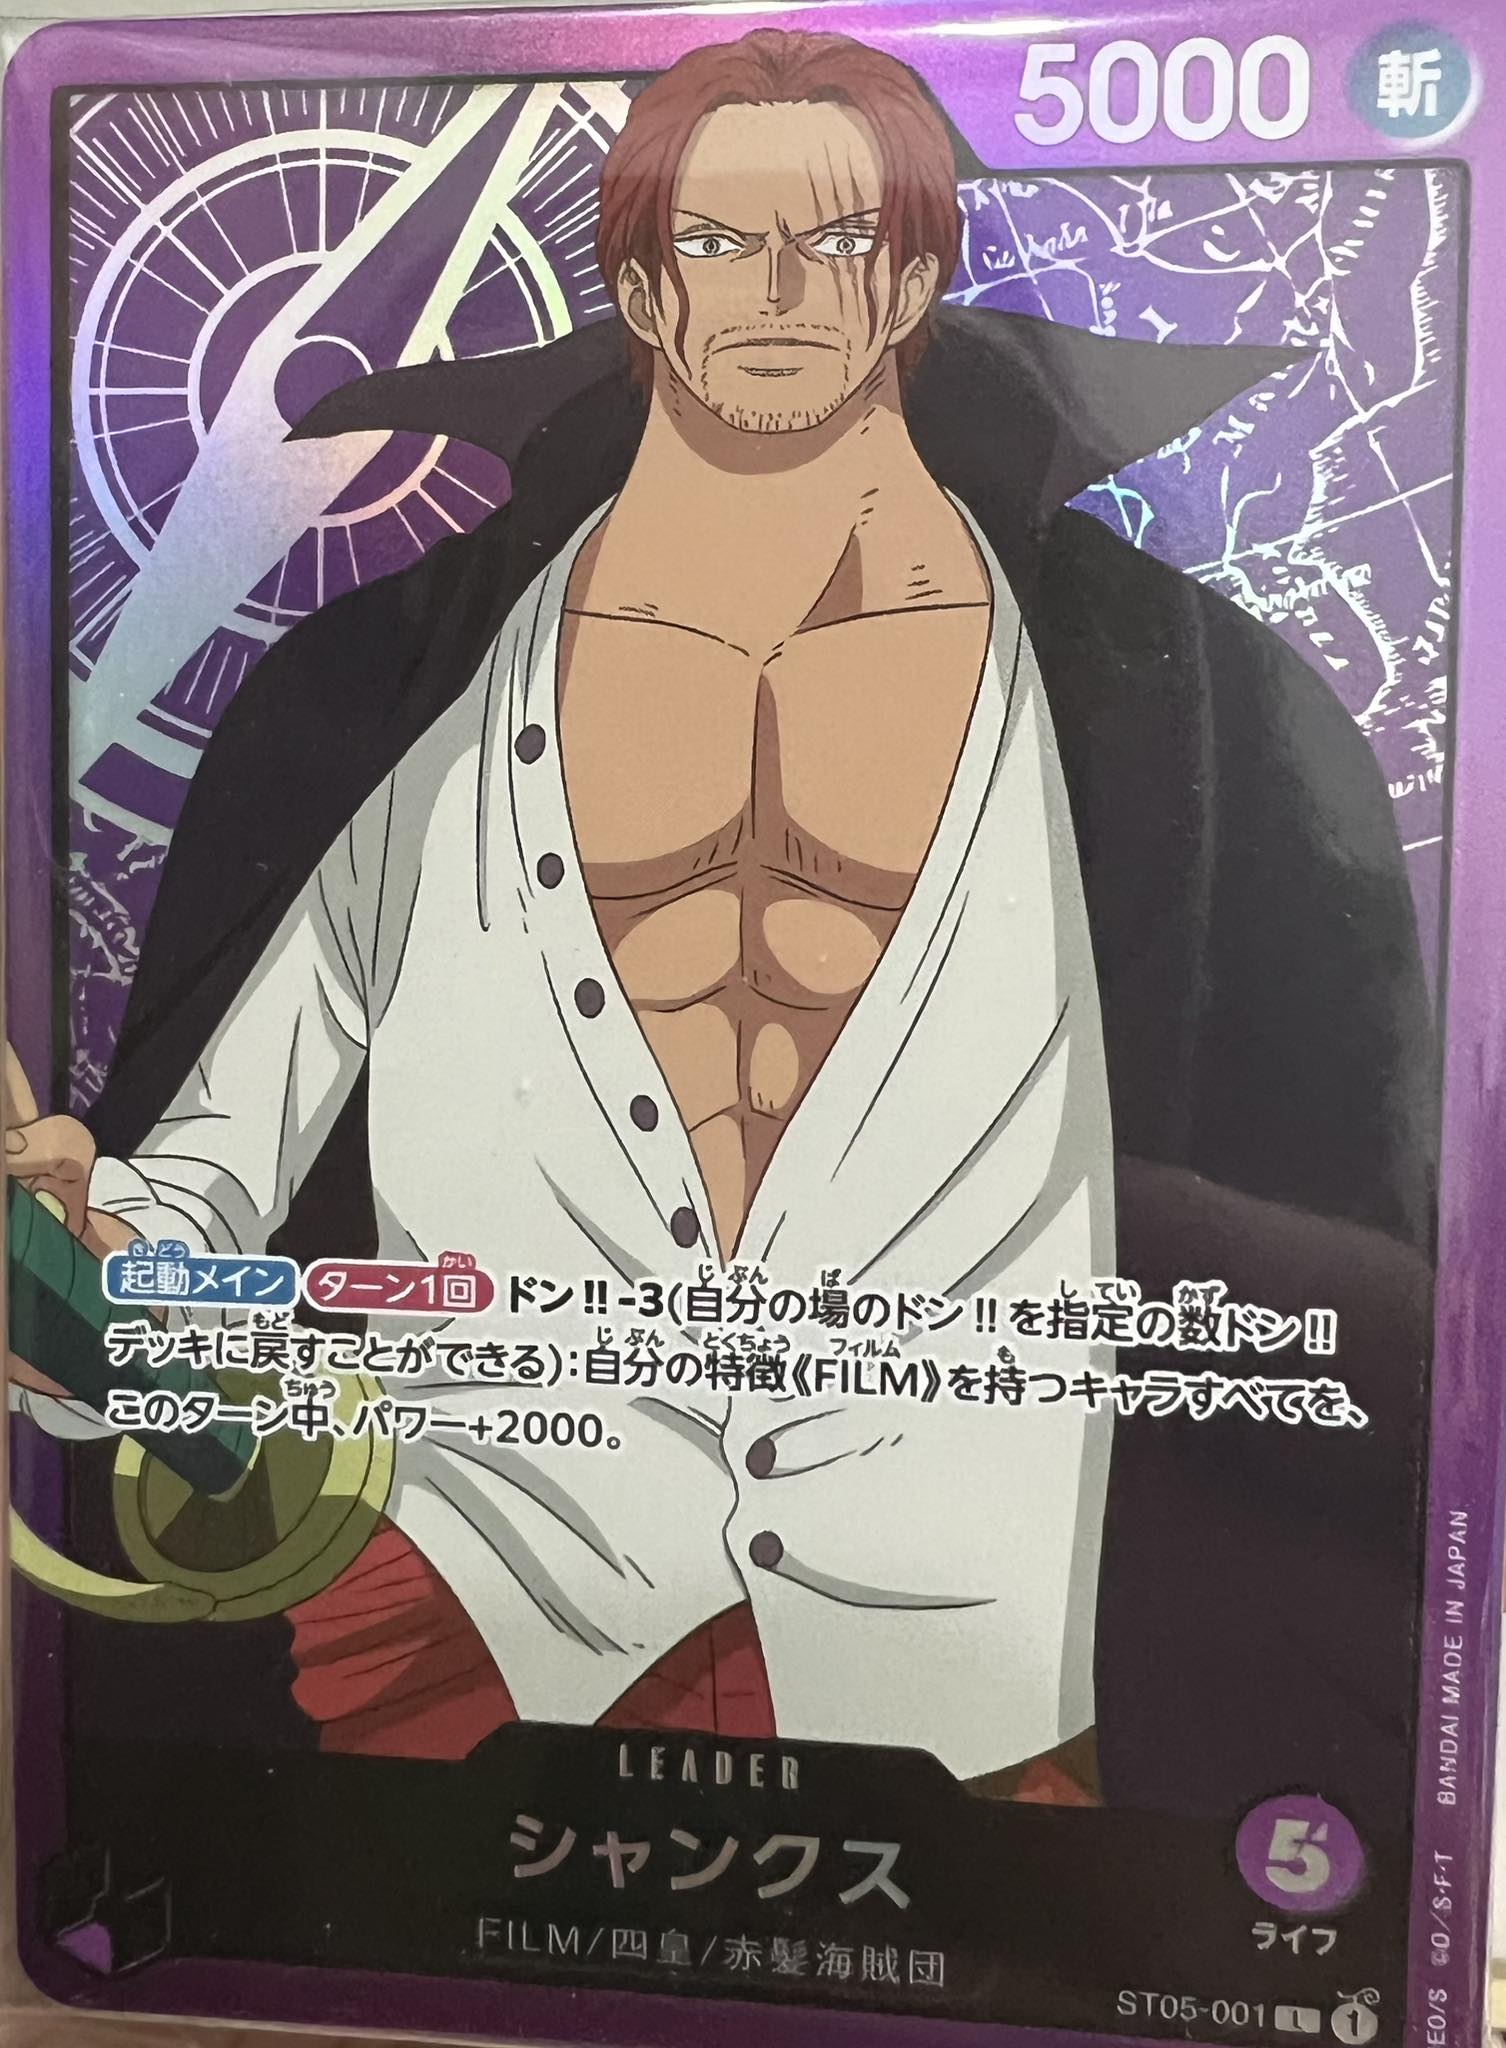 One Piece Card Game Starter Deck – ONE PIECE FILM edition – ST-05 (Japanese)